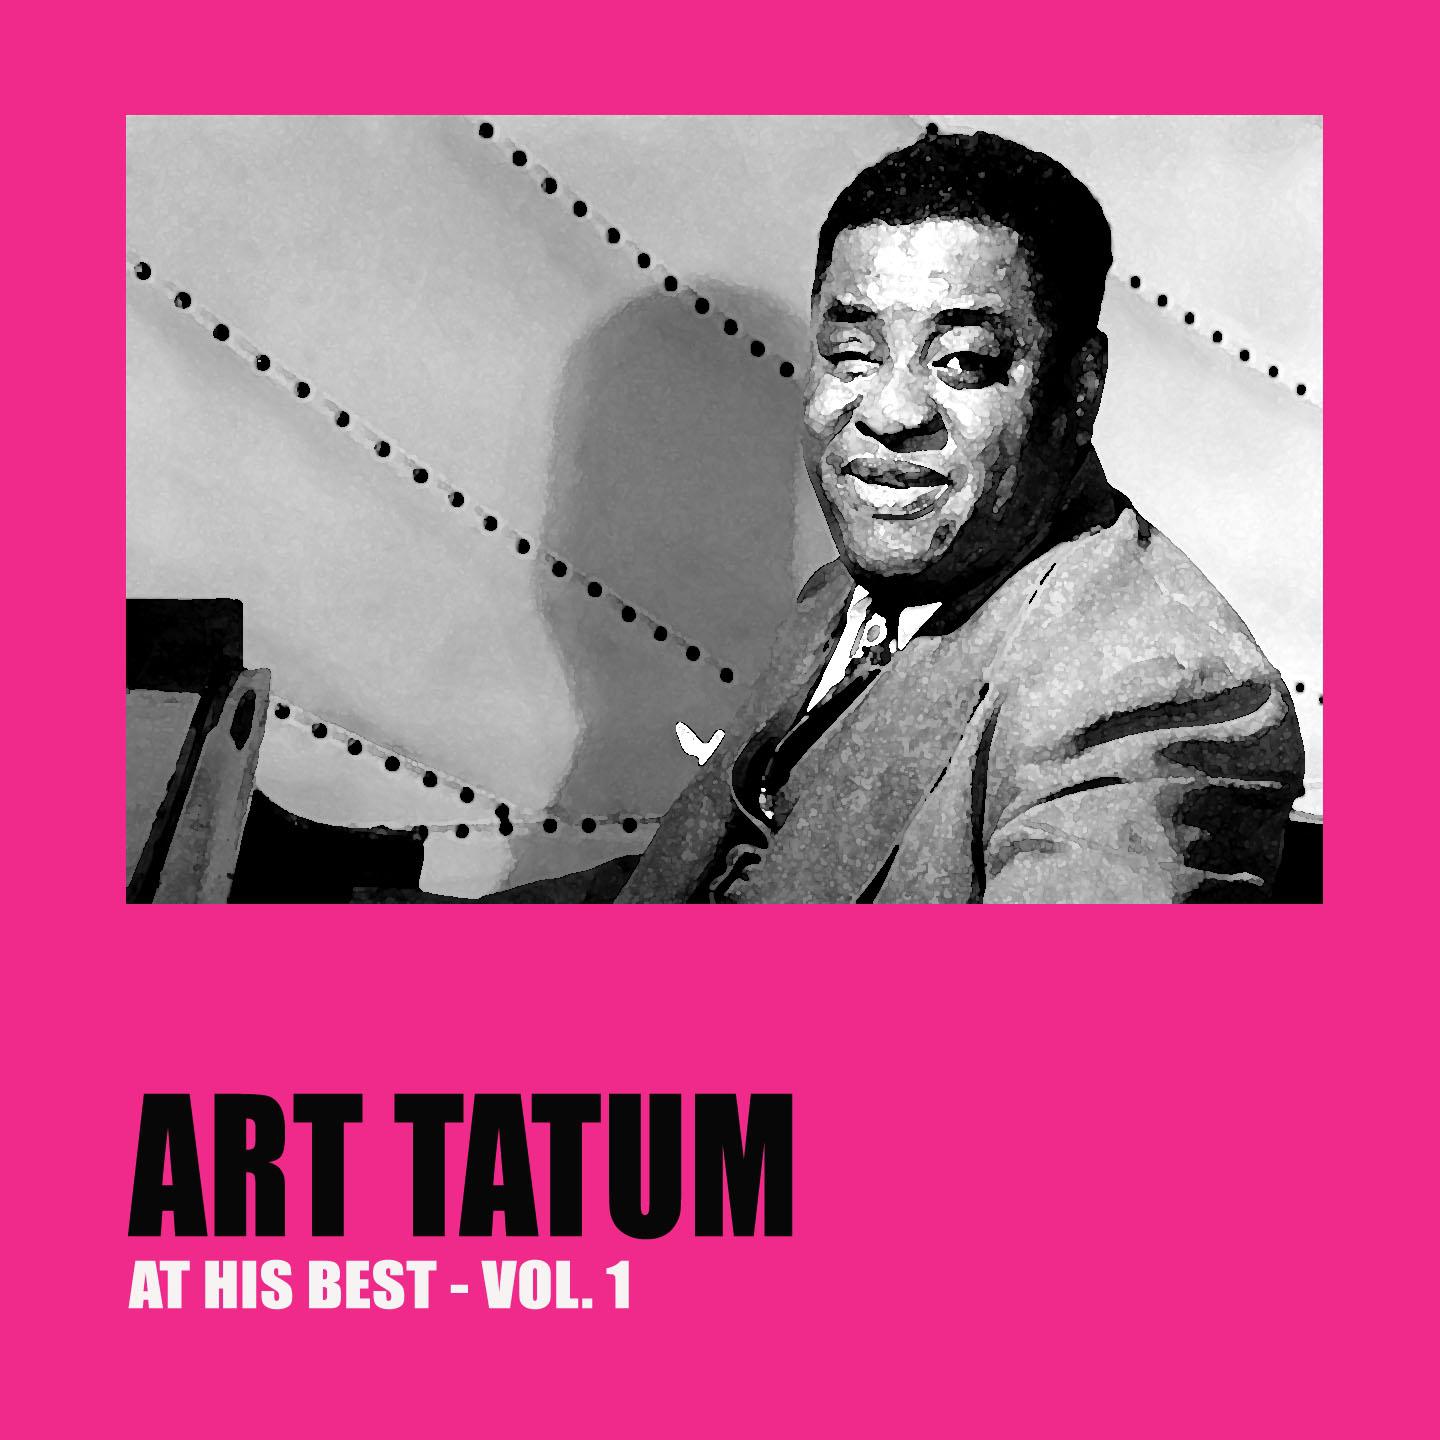 Art Tatum at His Best Vol. 1